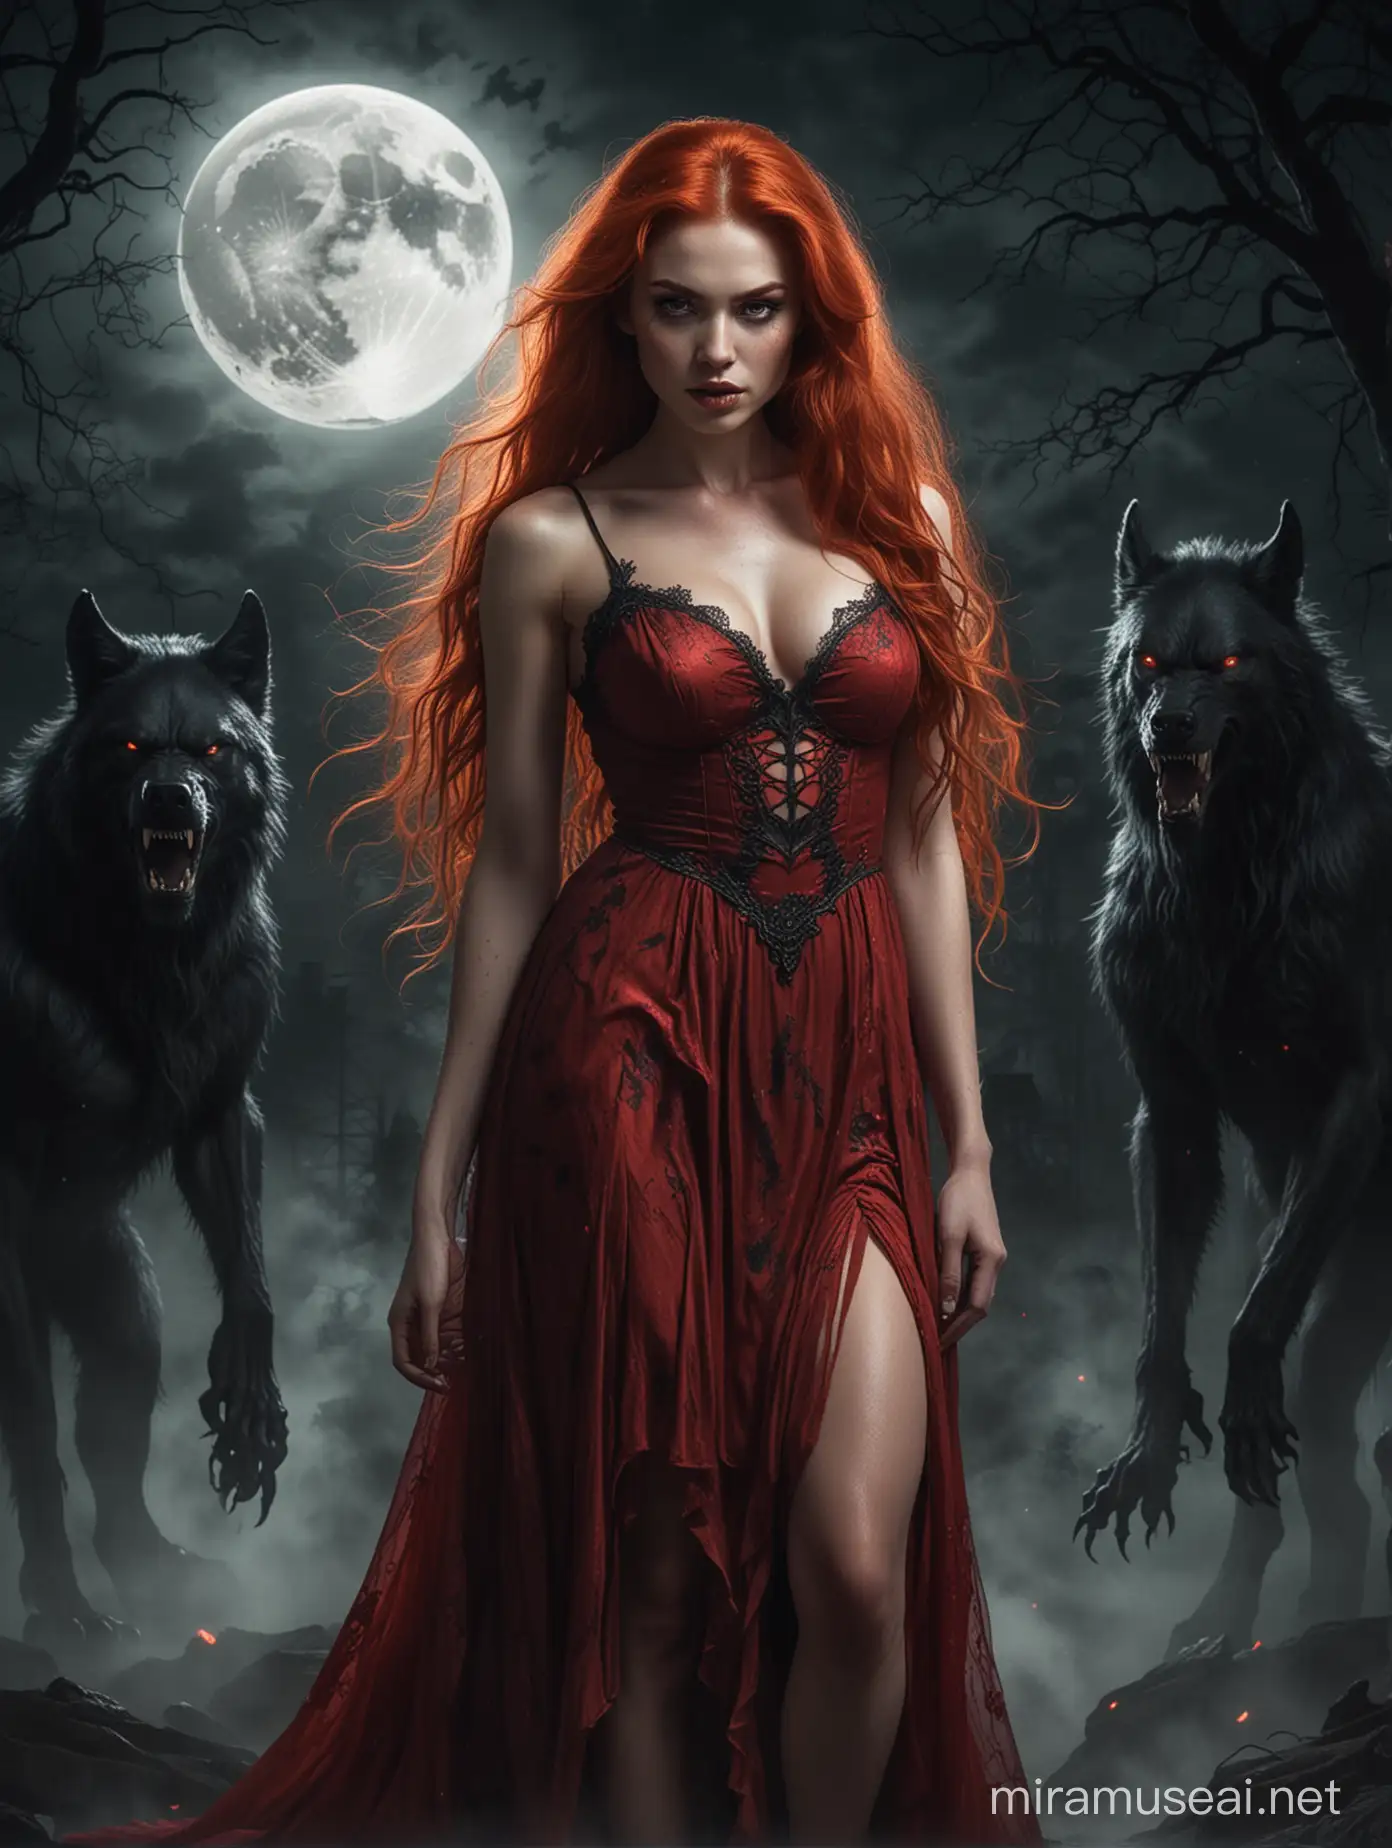 RedHaired Women with Creepy Werewolf Under a Goddess Moon